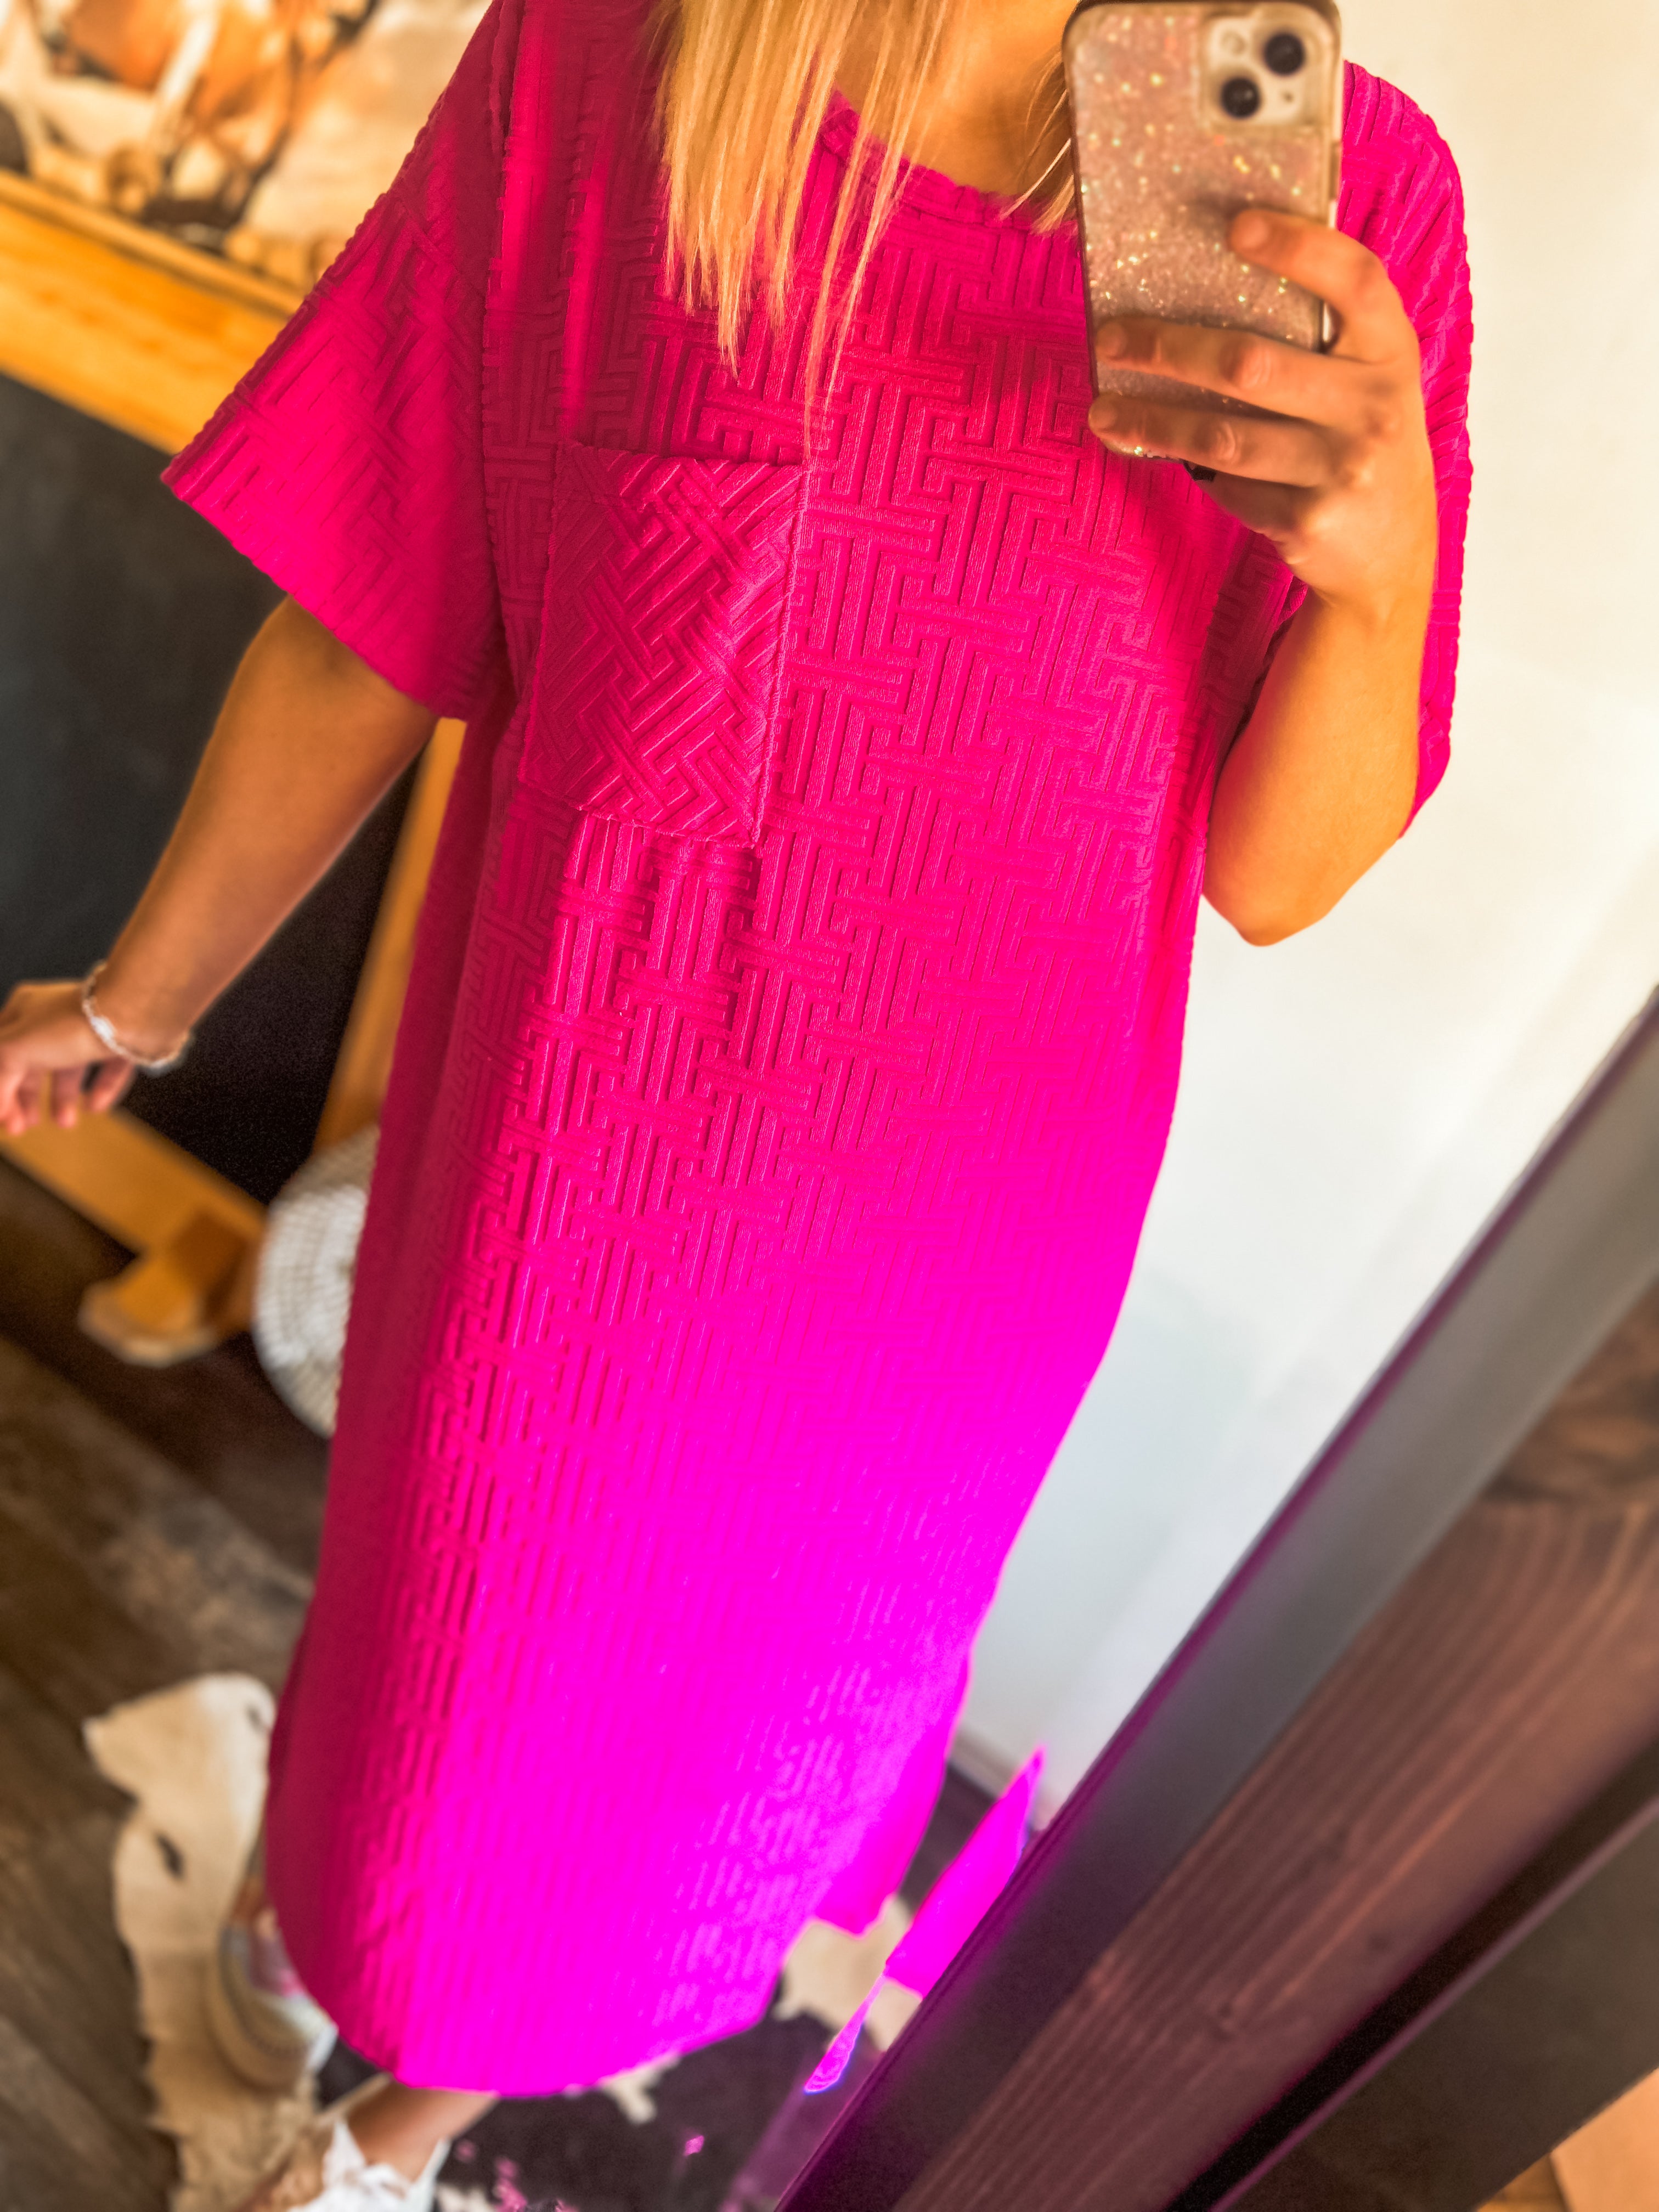 Perfect pink textured dress